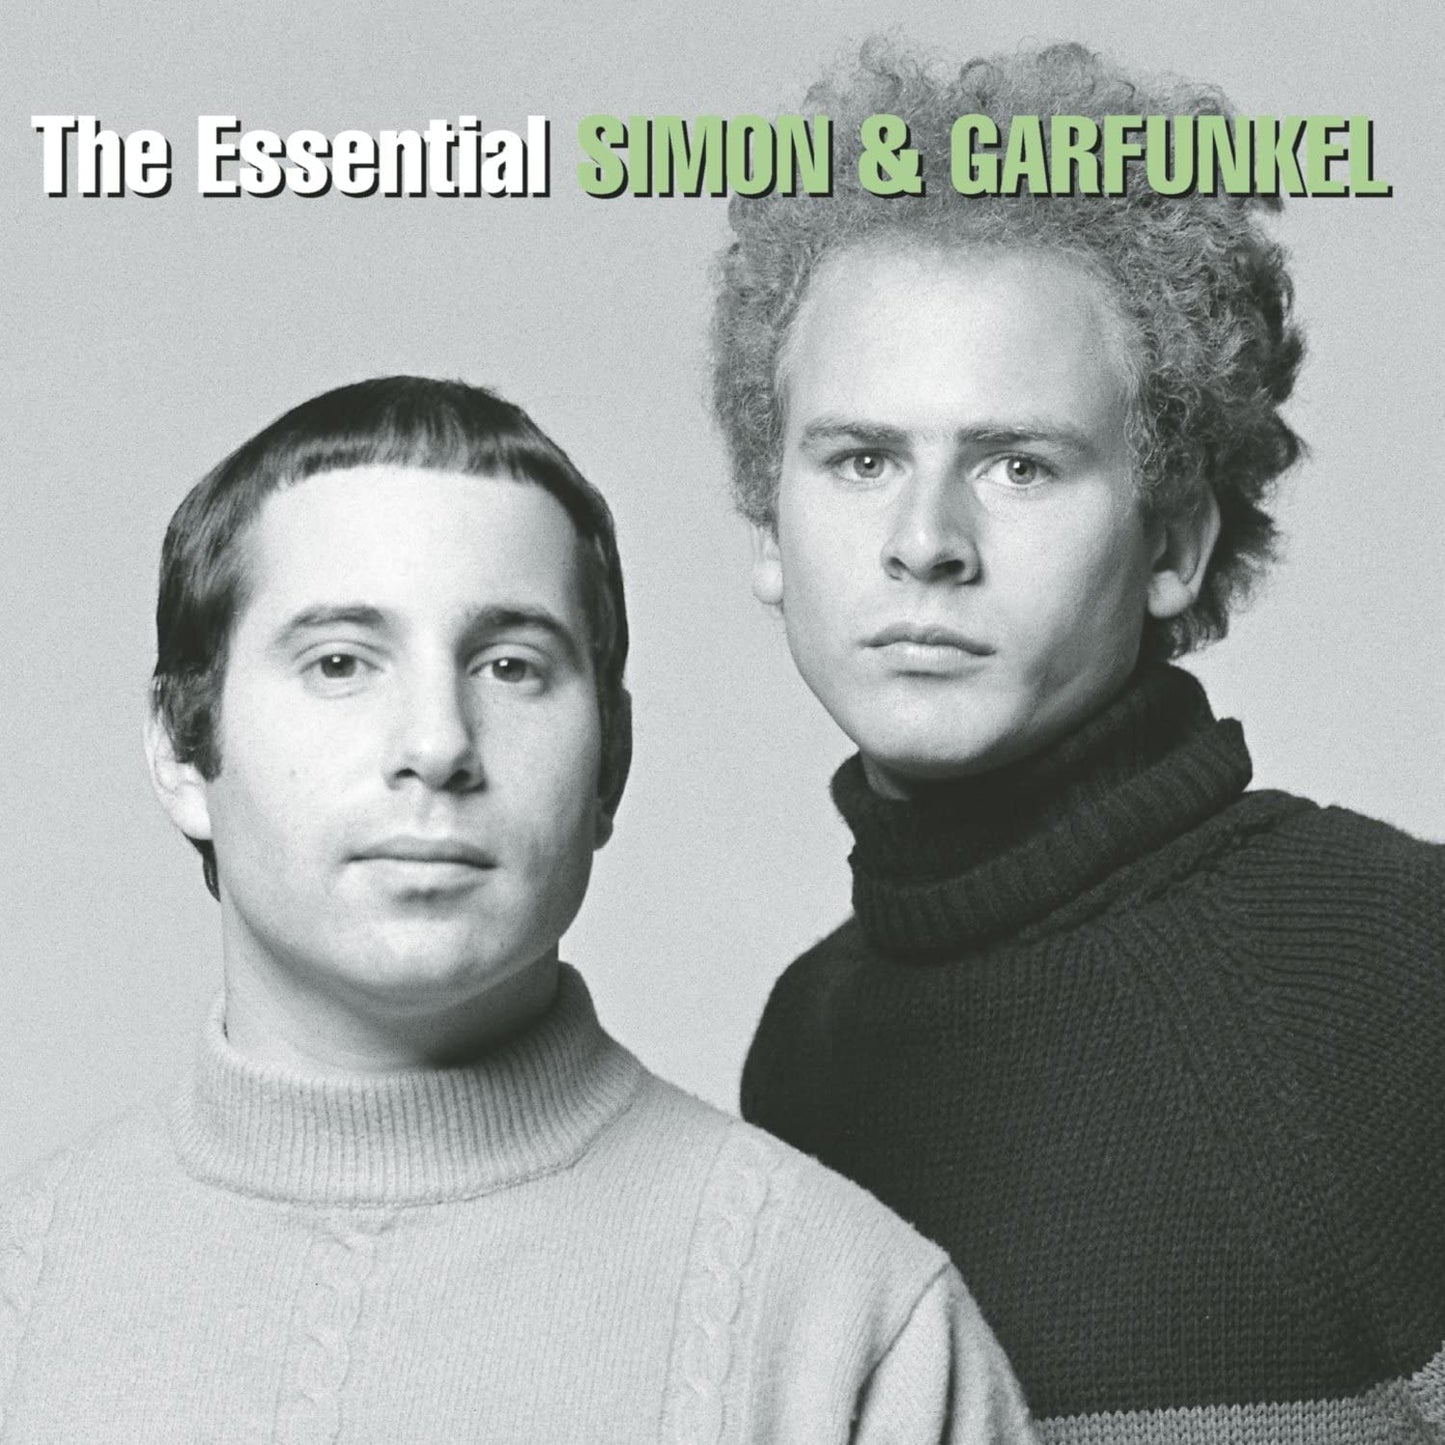 Simon & Garfunkel – The Essential Simon & Garfunkel - USED 2CD